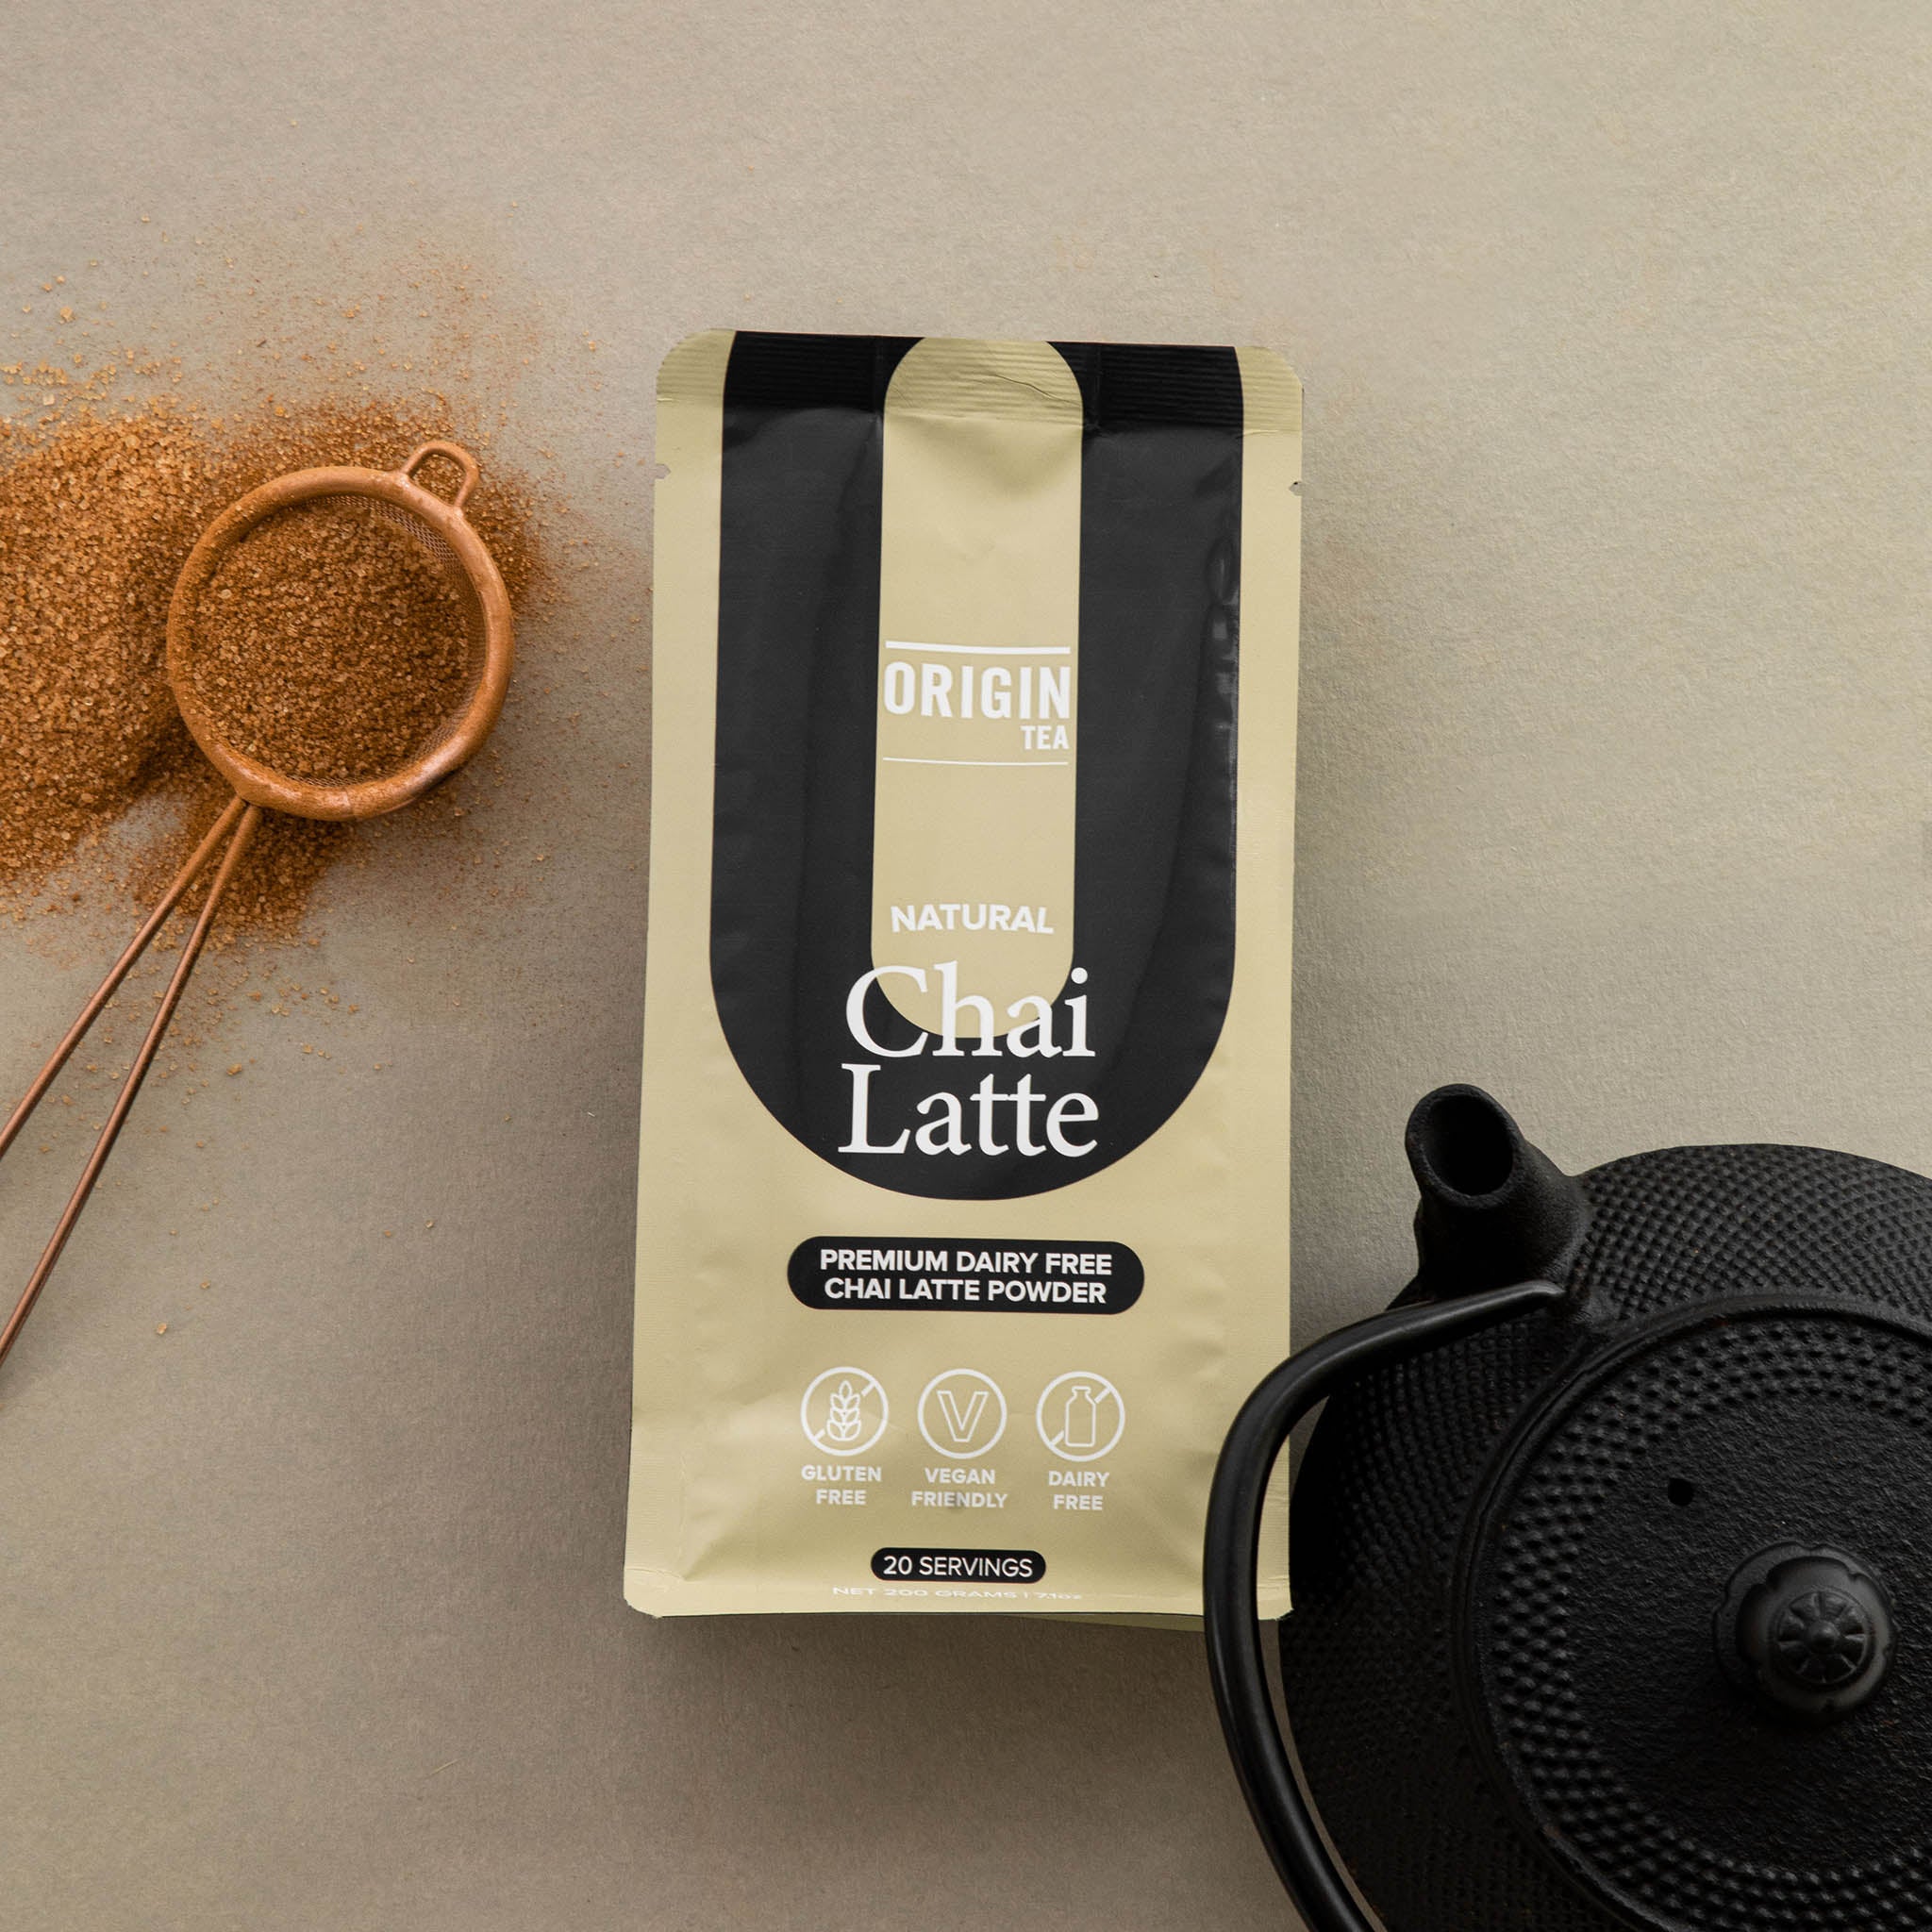 Caffeine Free Chai Latte - Origin Tea